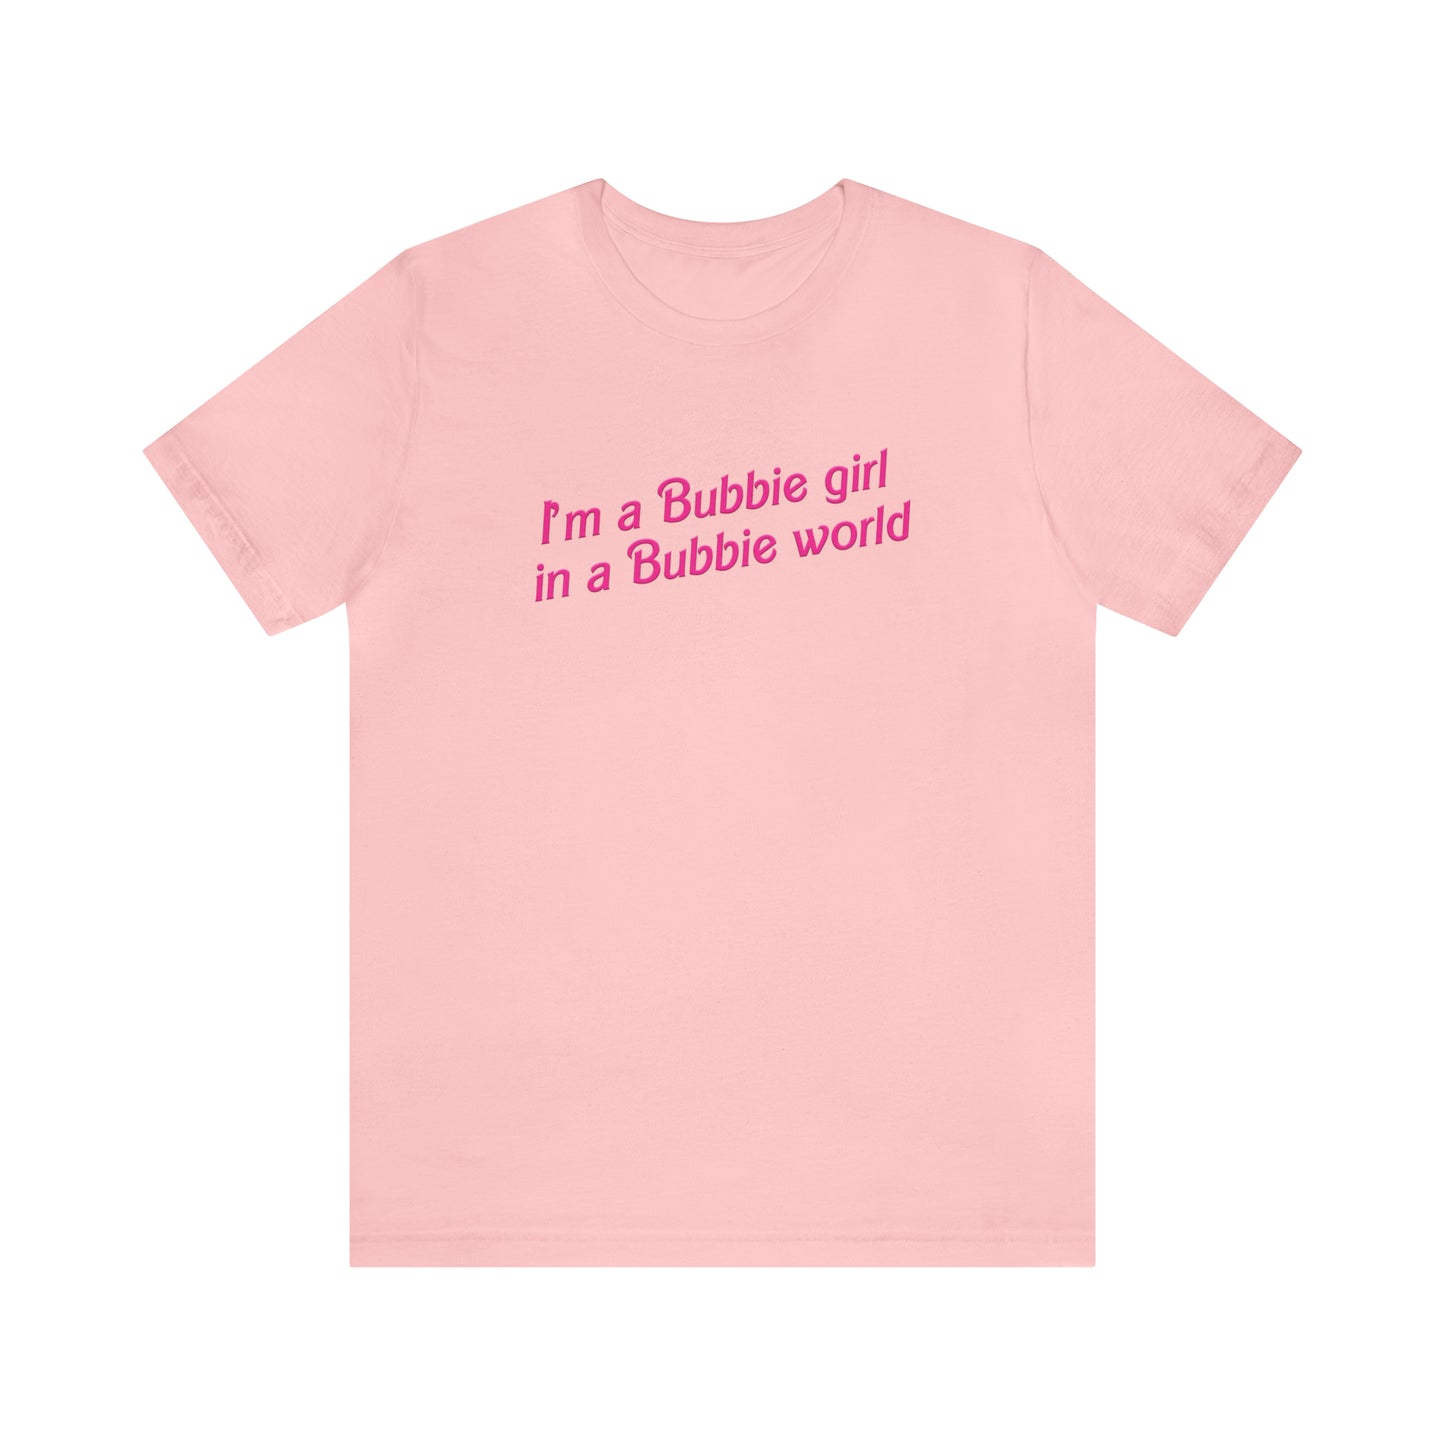 I'm A Bubbie Girl Tee